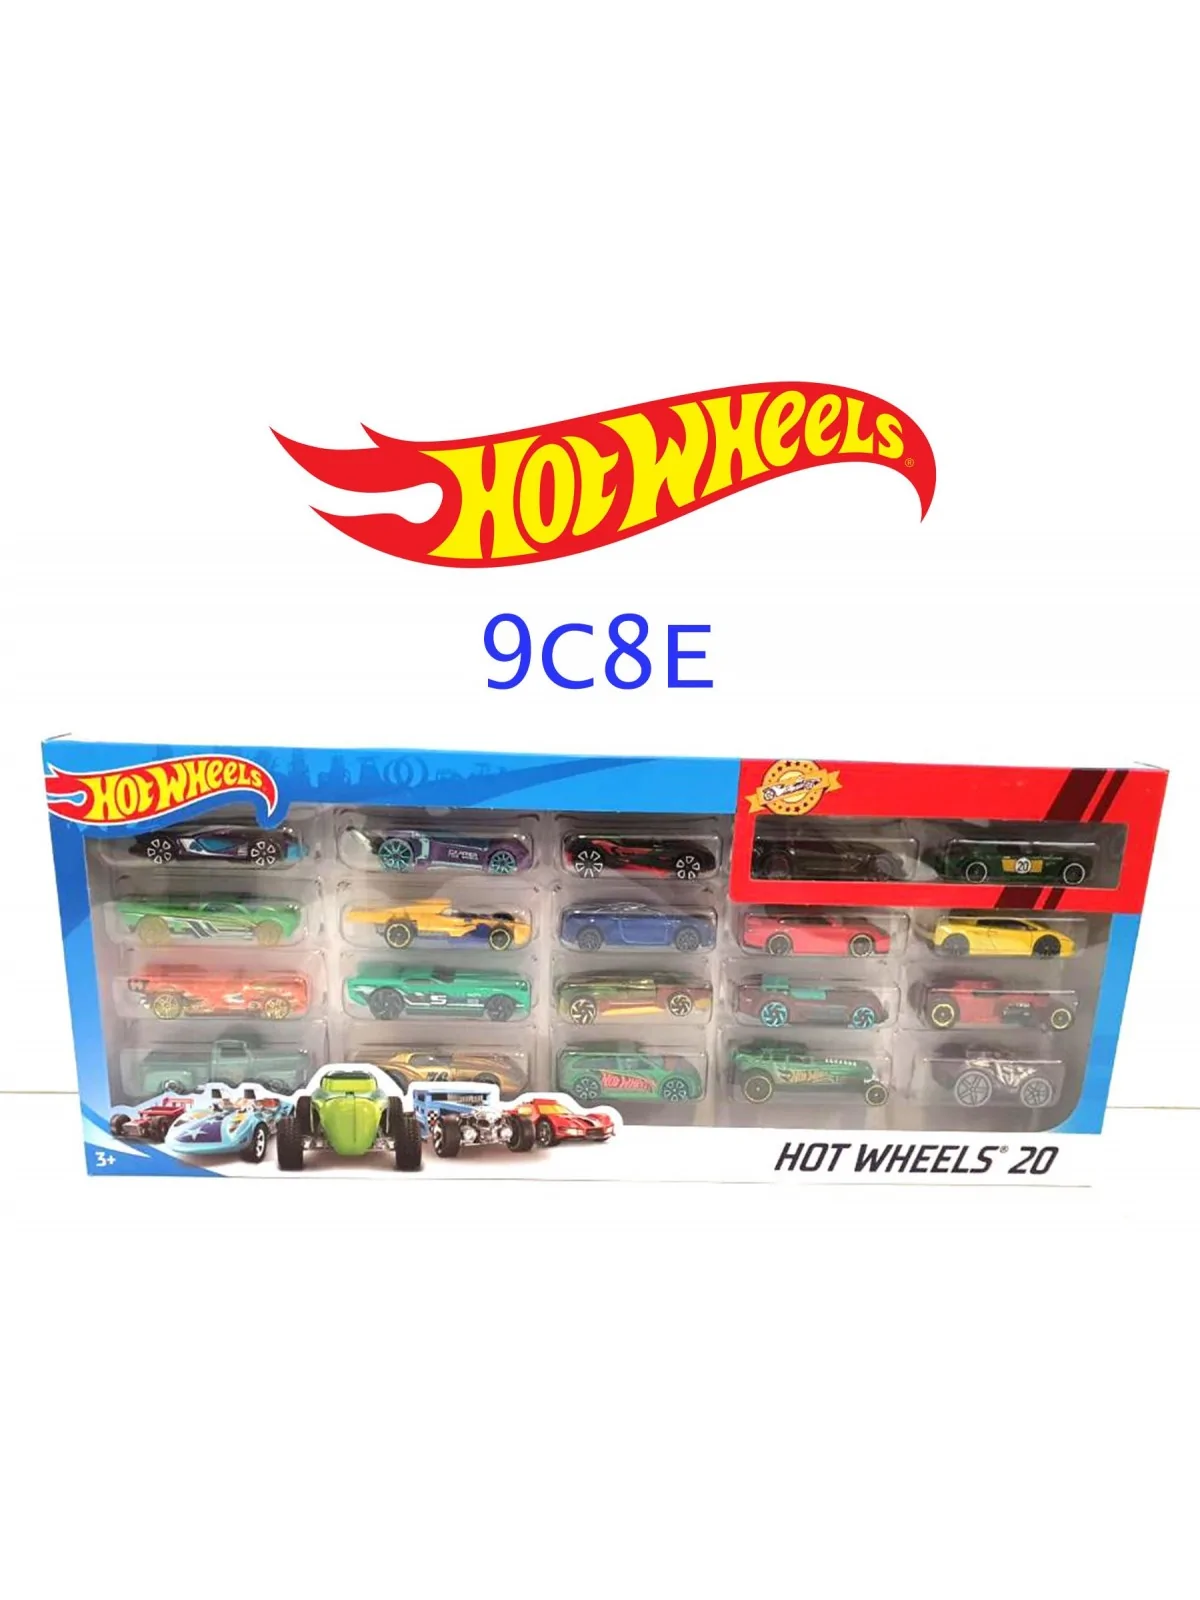 Hotwheels Basic 9C8E 20PK